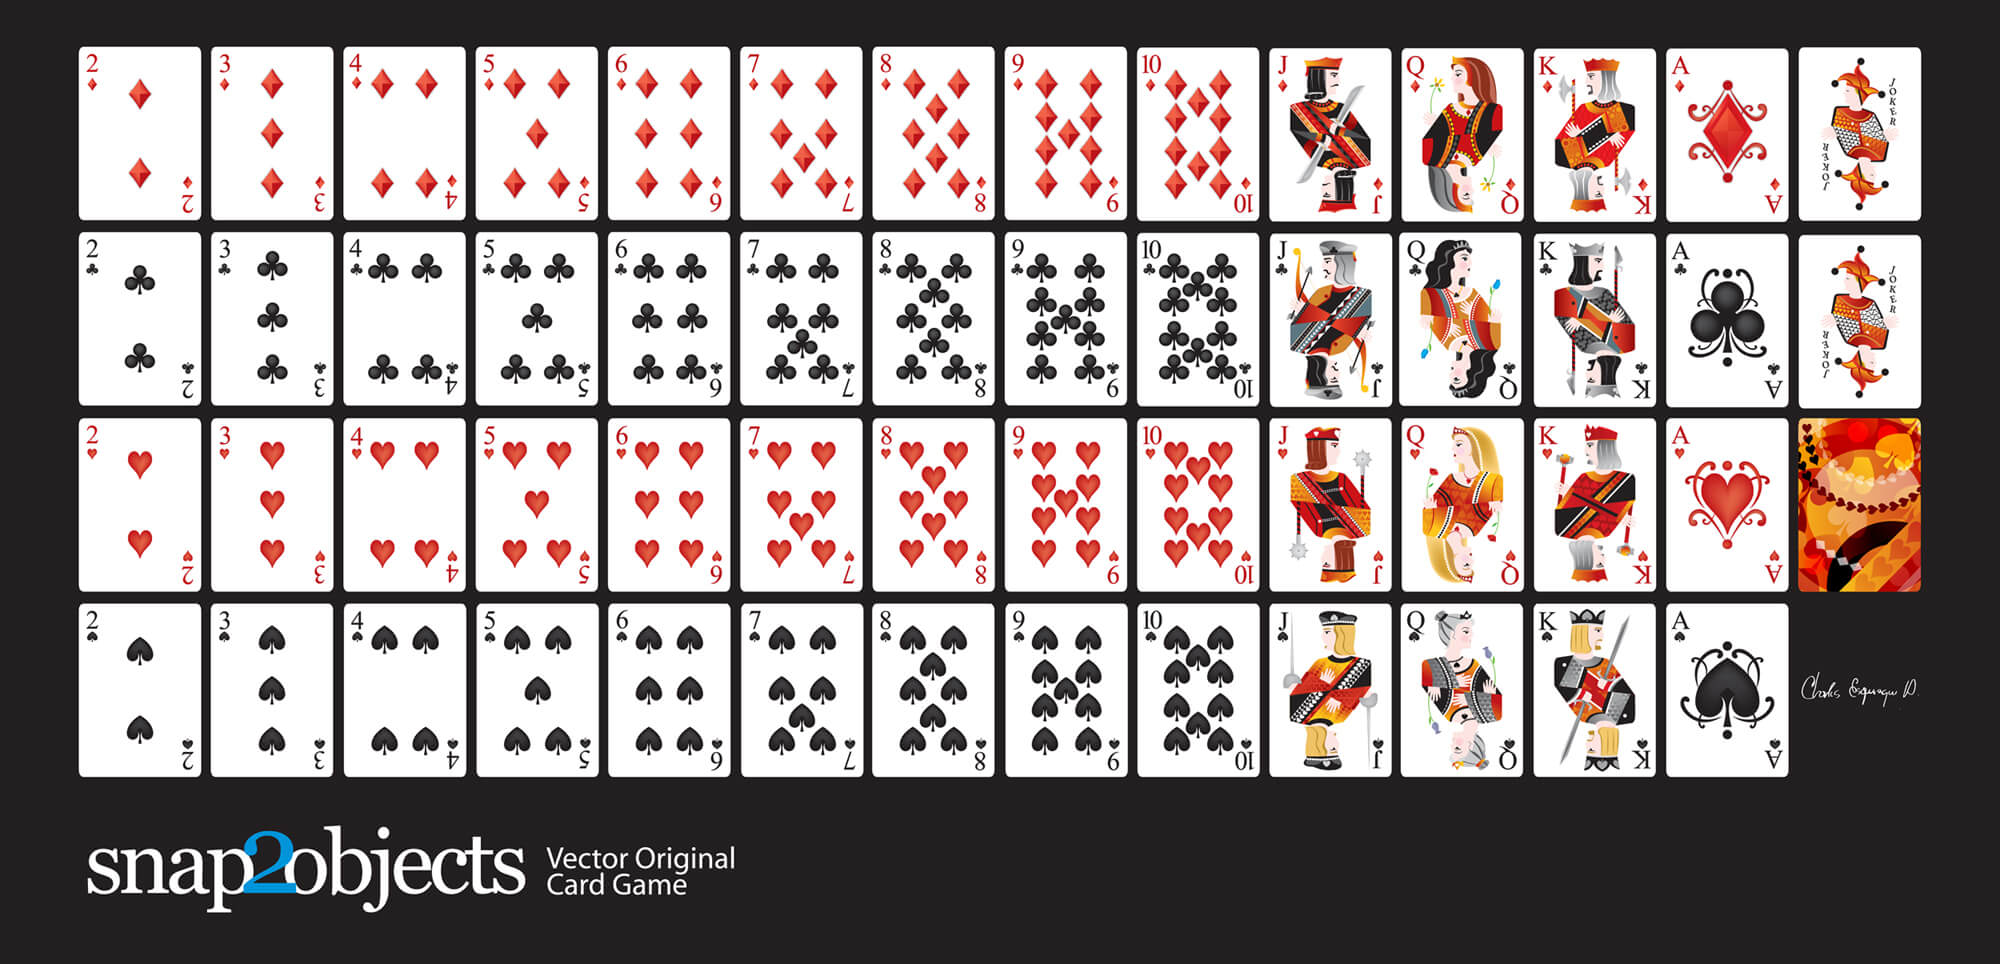 Playing Card Vector Art At Getdrawings | Free Download Regarding Playing Card Design Template